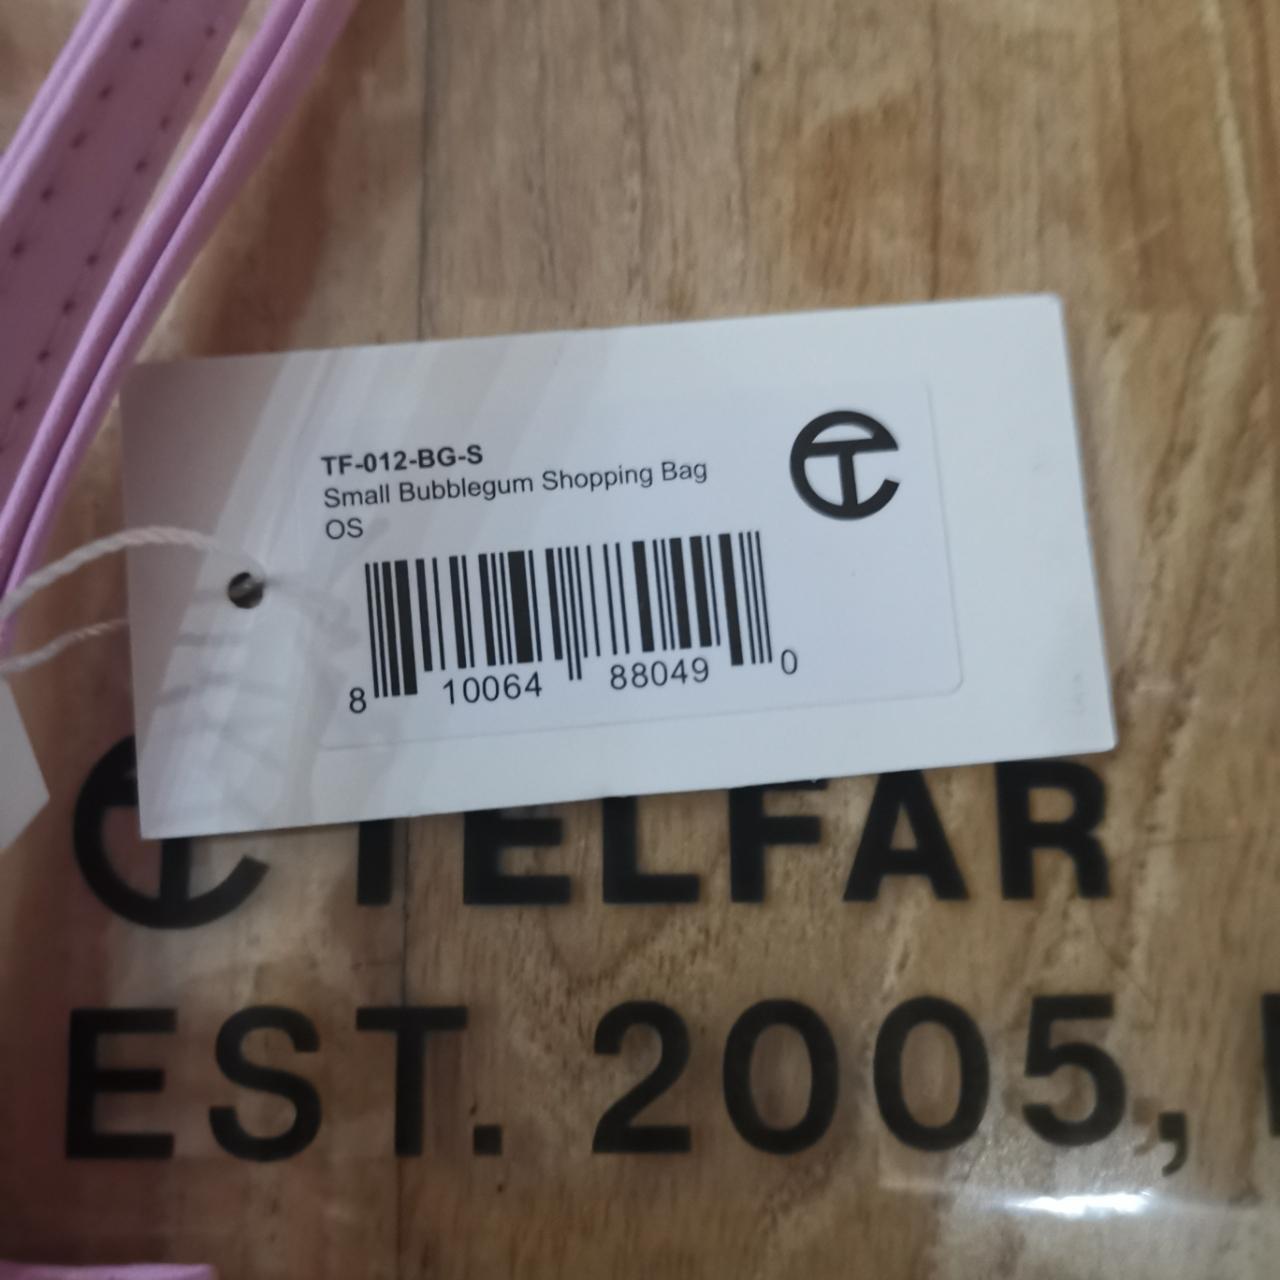 Telfar Shopping Bag Small Bubblegum Pink